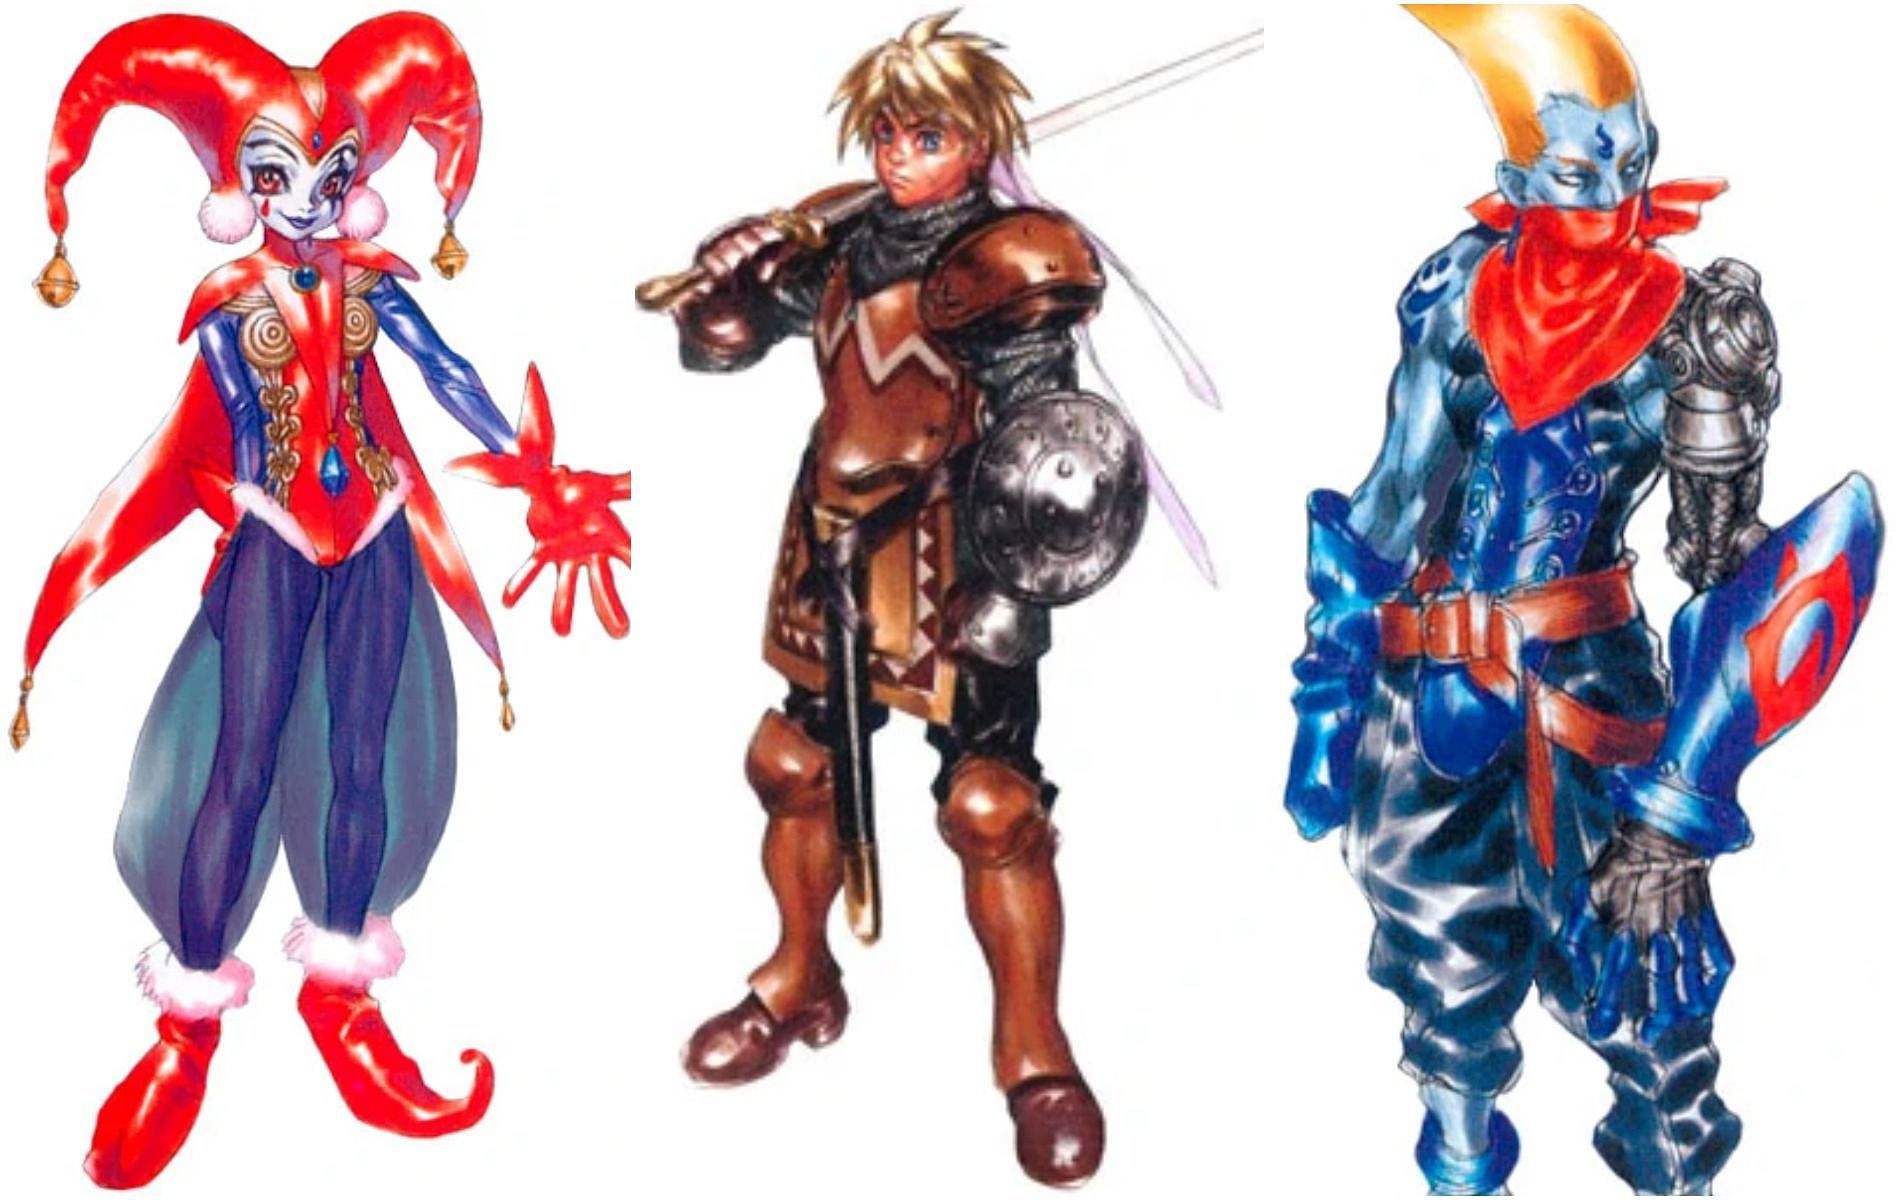 Characters (Chrono Cross)